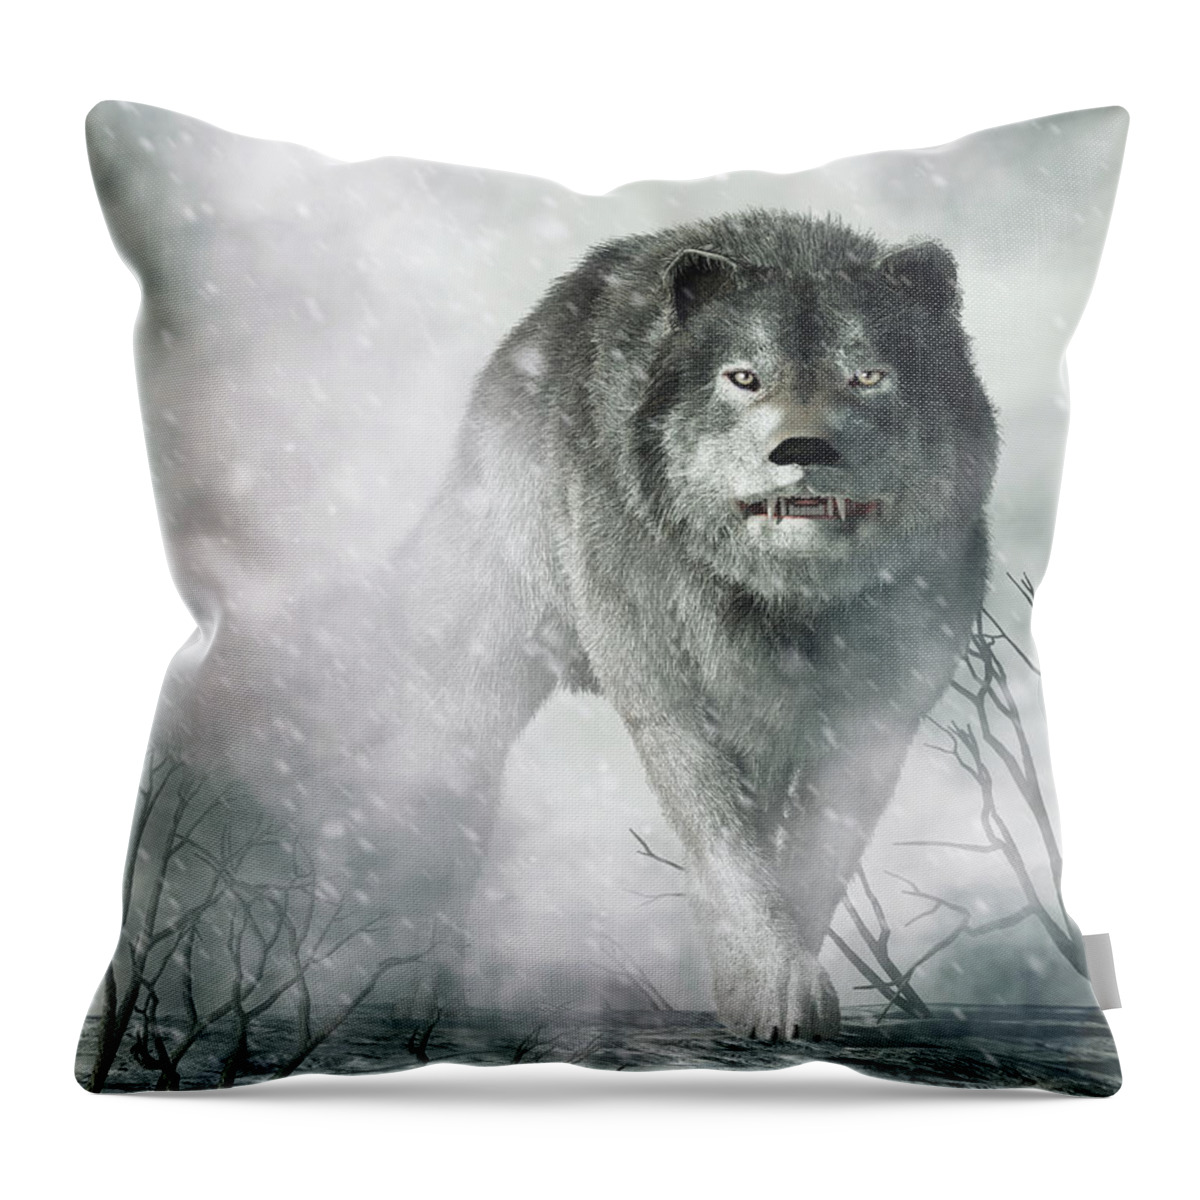 Wolf Of Winter Throw Pillow featuring the digital art The Wolf of Winter by Daniel Eskridge